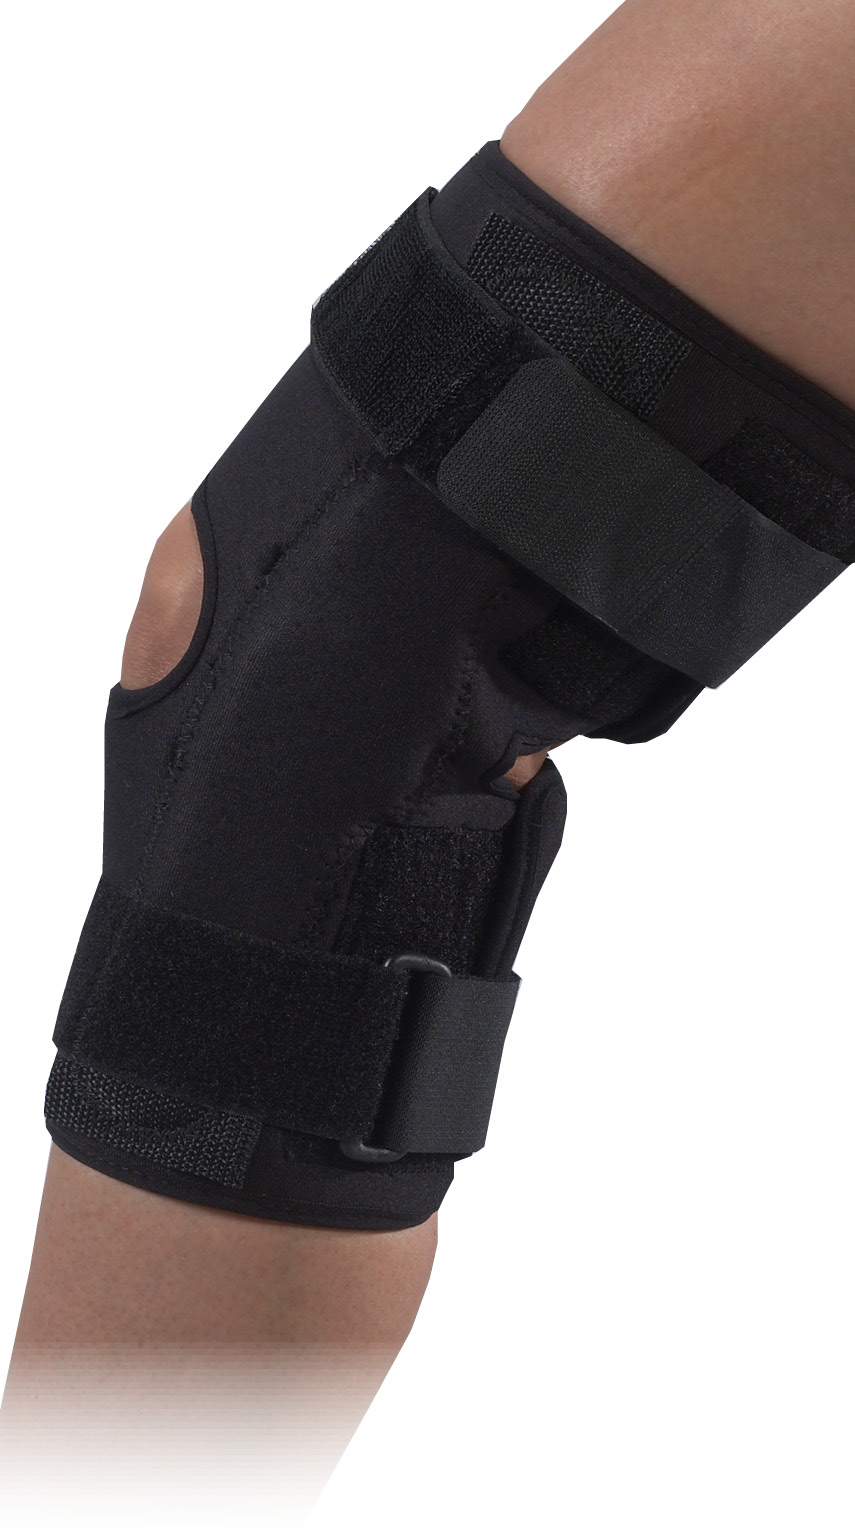 X3 Neoprene Hinged Knee Support - Rom, Large